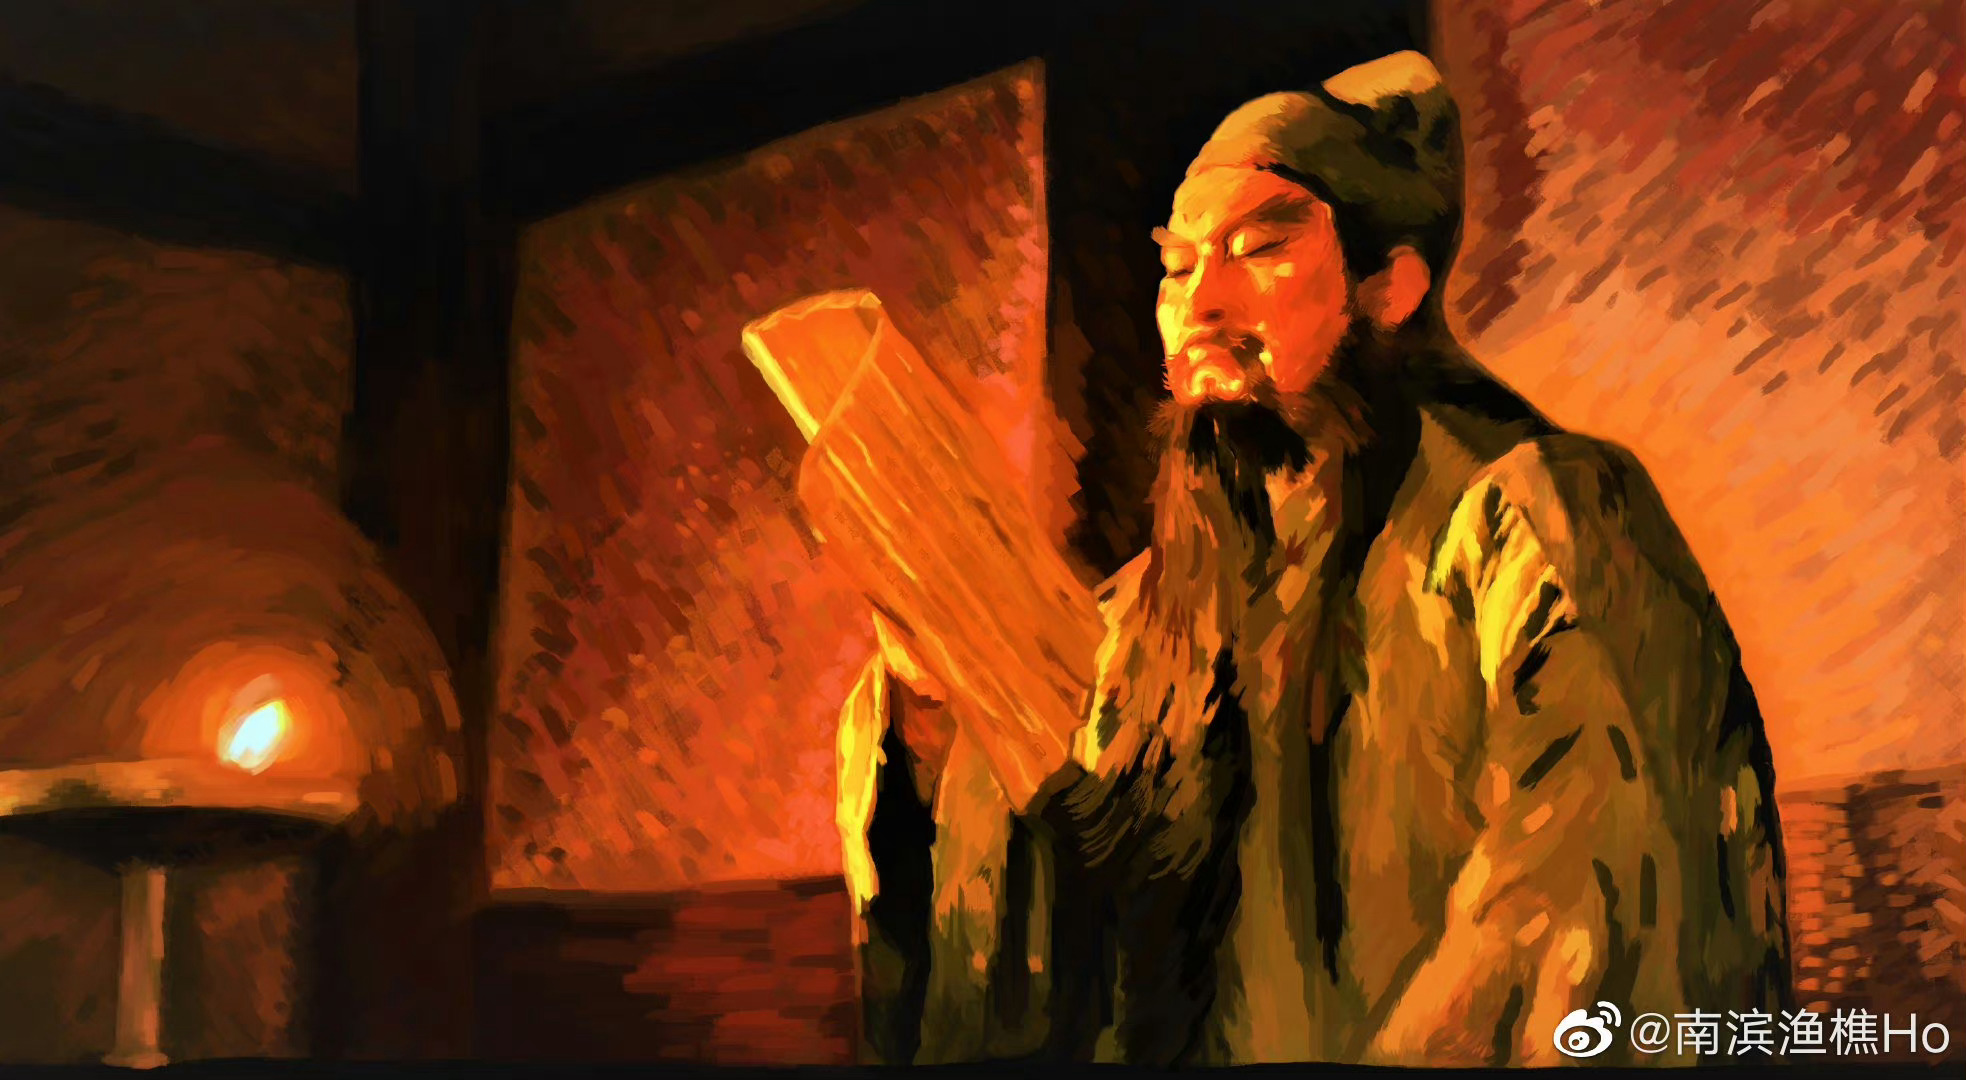 General 1966x1080 Guanyu reading history warrior night room Ancient China digital painting painting artwork digital art watermarked